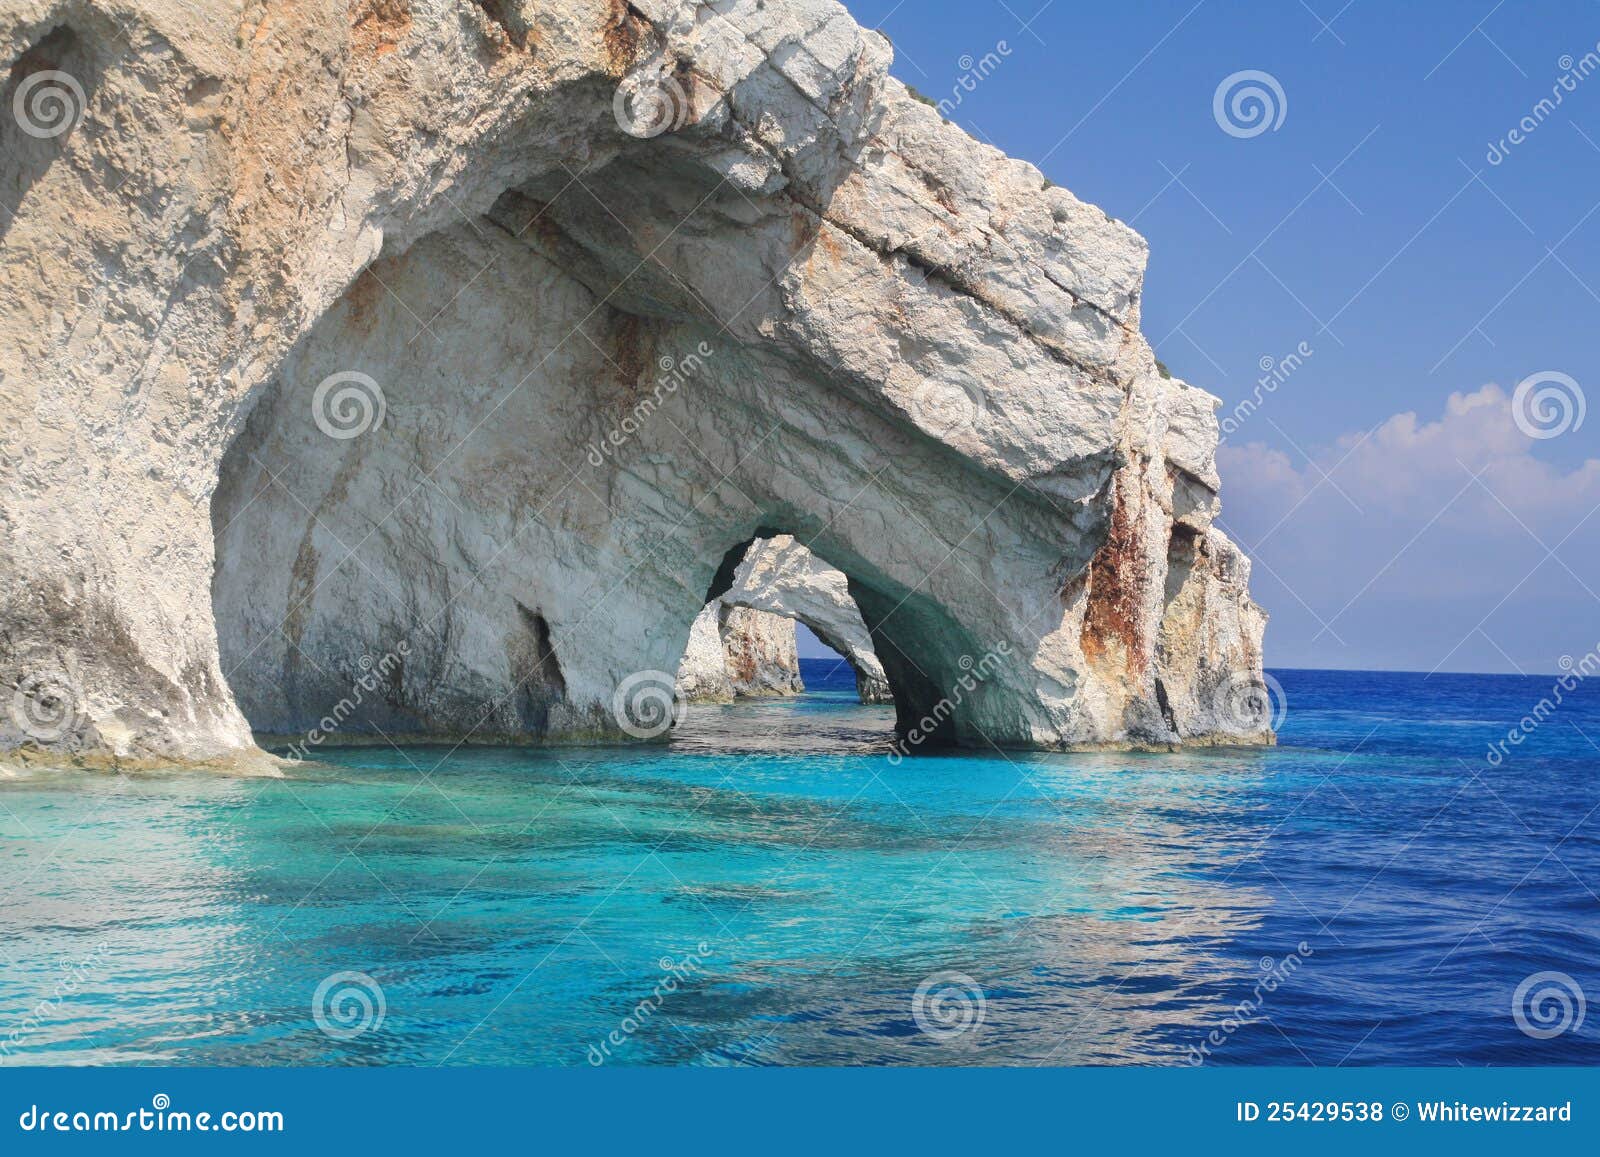 blue caves on zakynthos island, greece